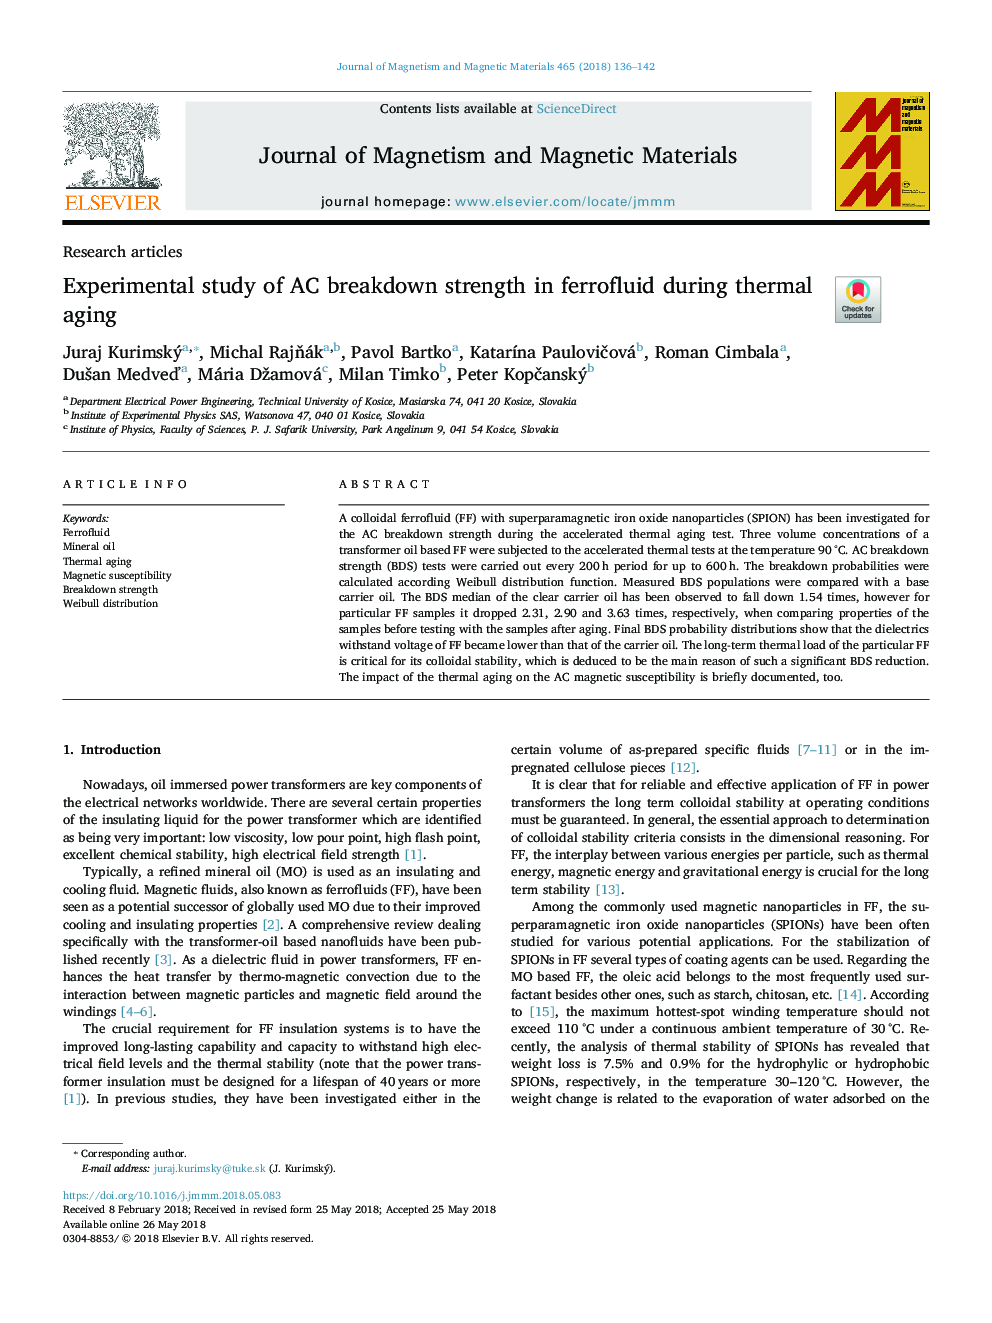 Experimental study of AC breakdown strength in ferrofluid during thermal aging